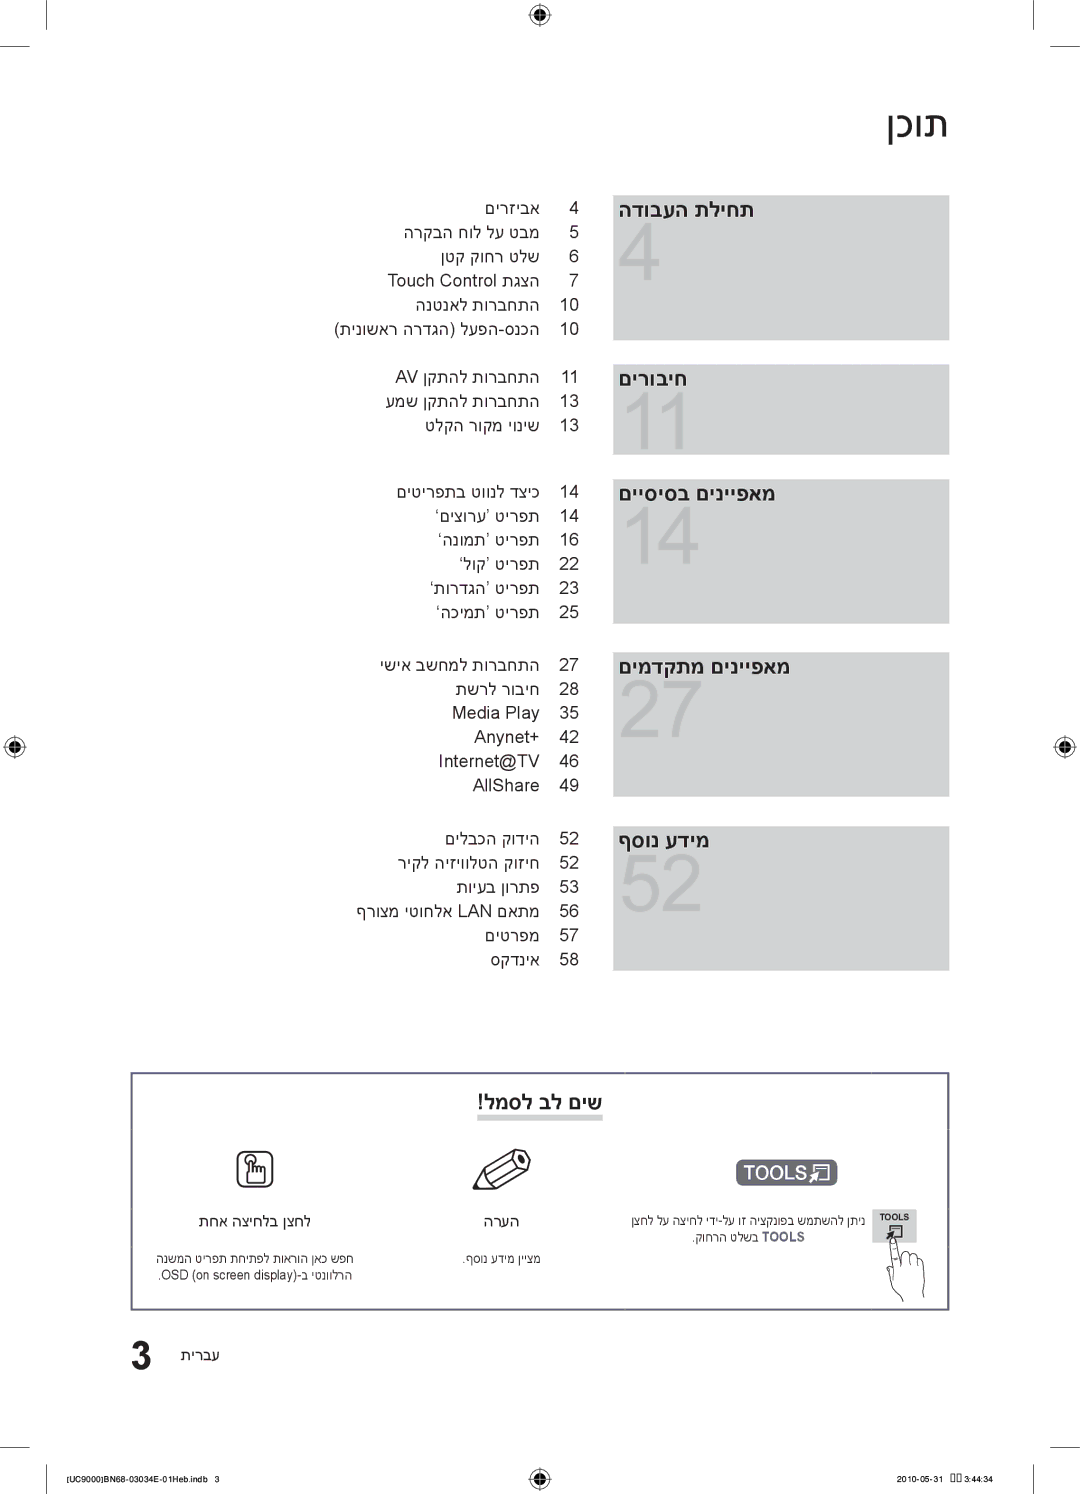 Samsung UA55C9000SRXSQ manual הדובעה תליחת םירוביח םייסיסב םינייפאמ םימדקתמ‏ םינייפאמ, ףסונ‏ עדימ, למסל בל םיש 